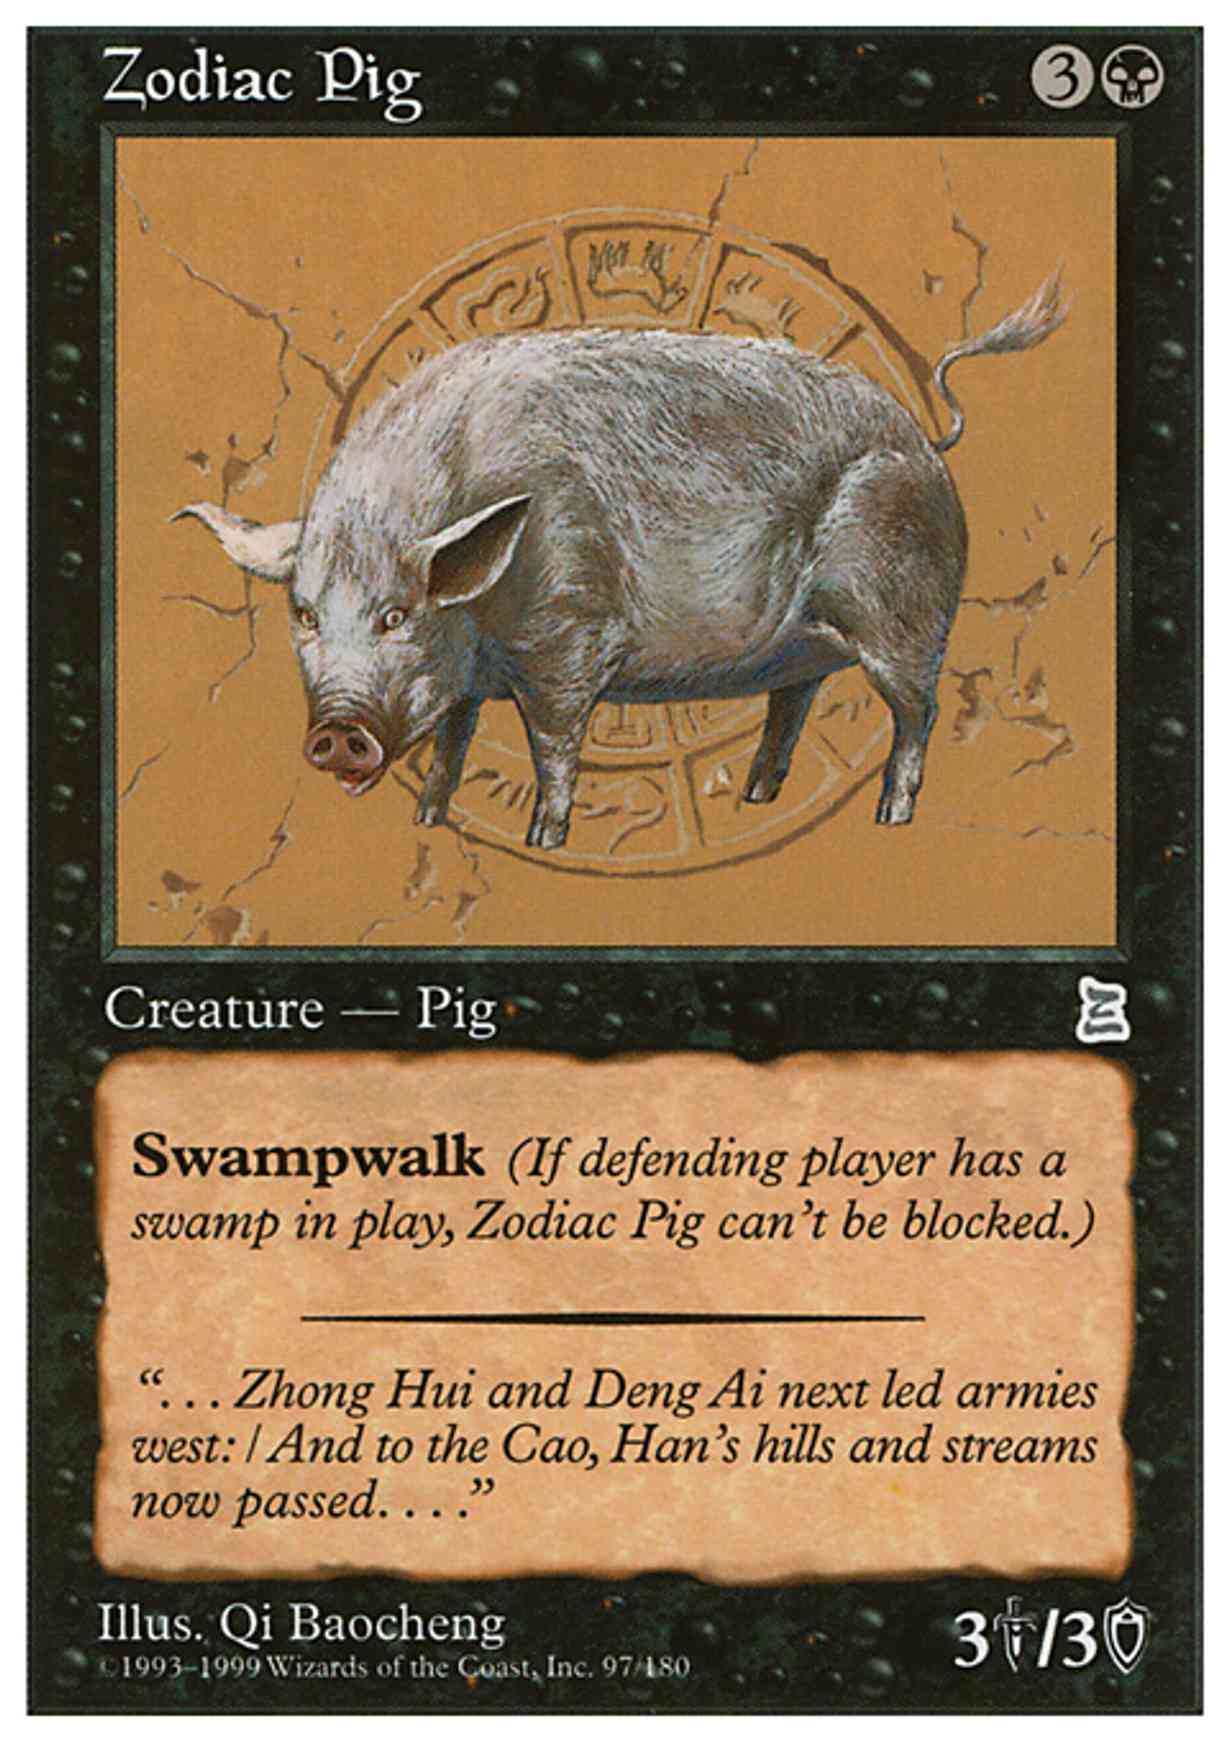 Zodiac Pig magic card front